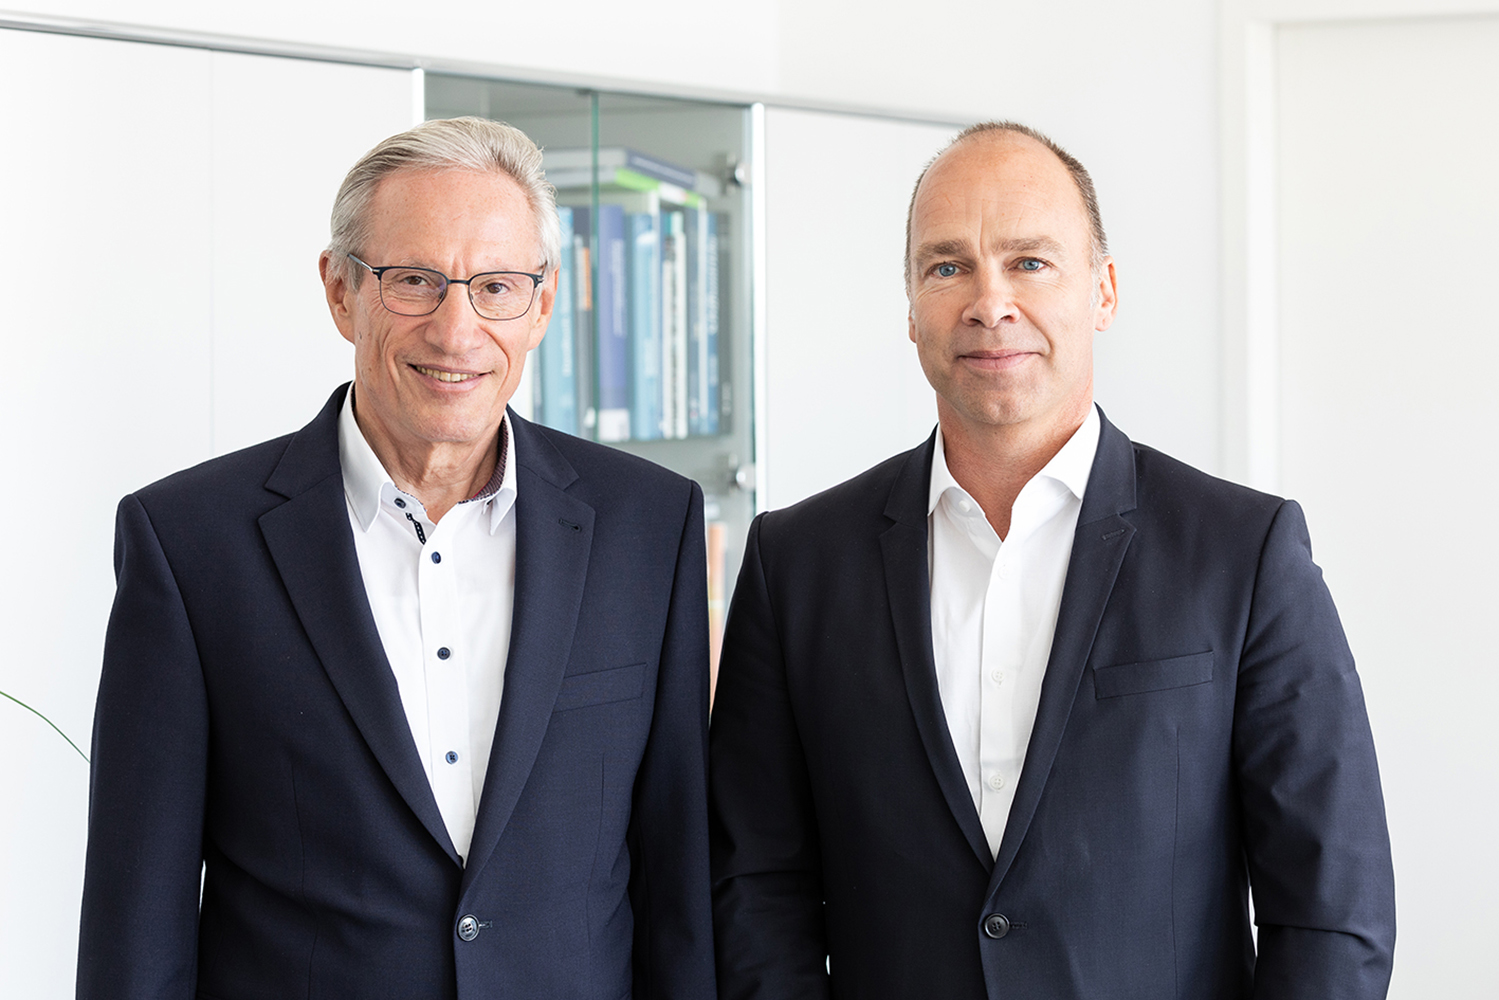 Professor Fritz Klocke and Professor Thomas Bauernhansl are the directors of Fraunhofer IPA in Stuttgart.